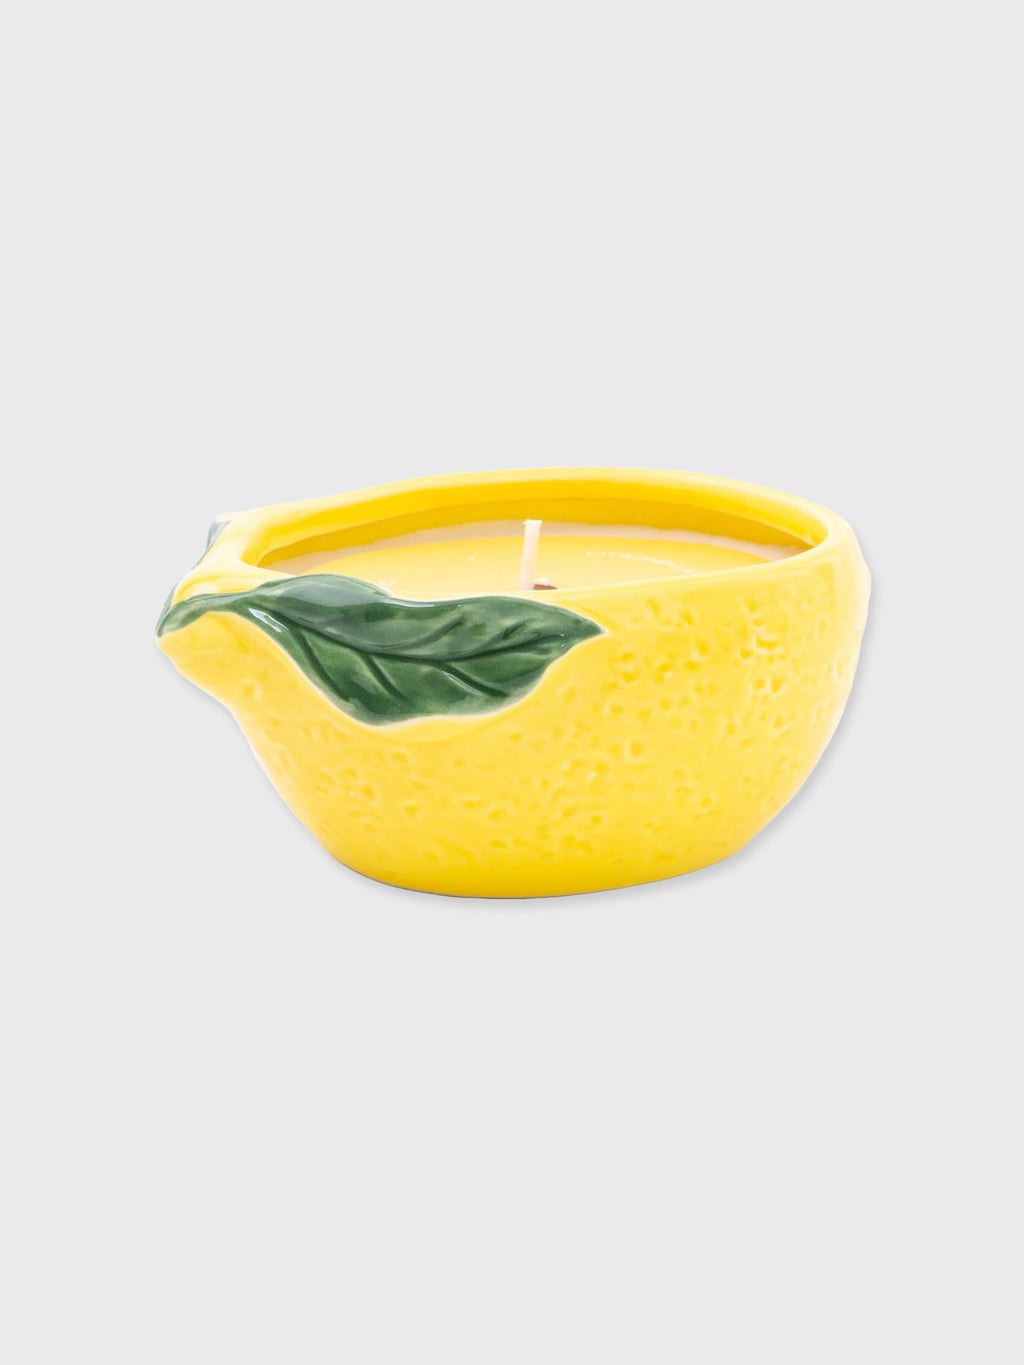 Lemon Candle in ceramic pot